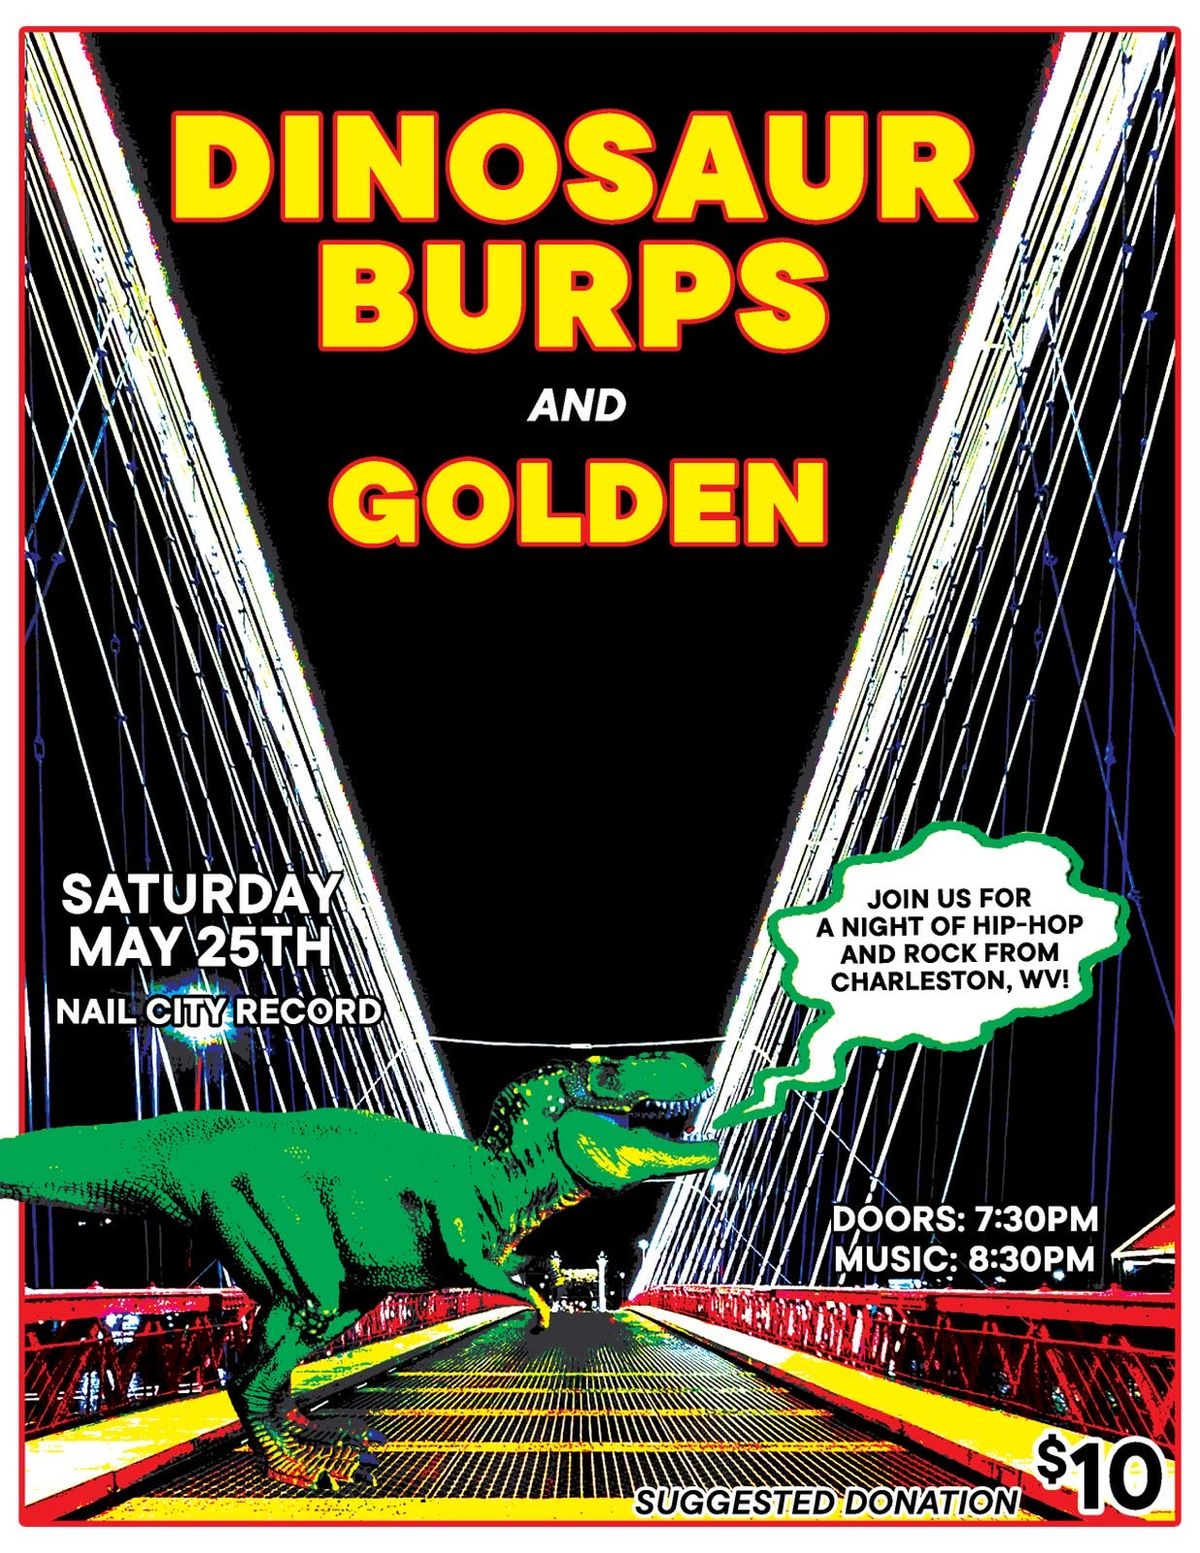 Dinosaur Burps with GOLDEN Live at Nail City Record